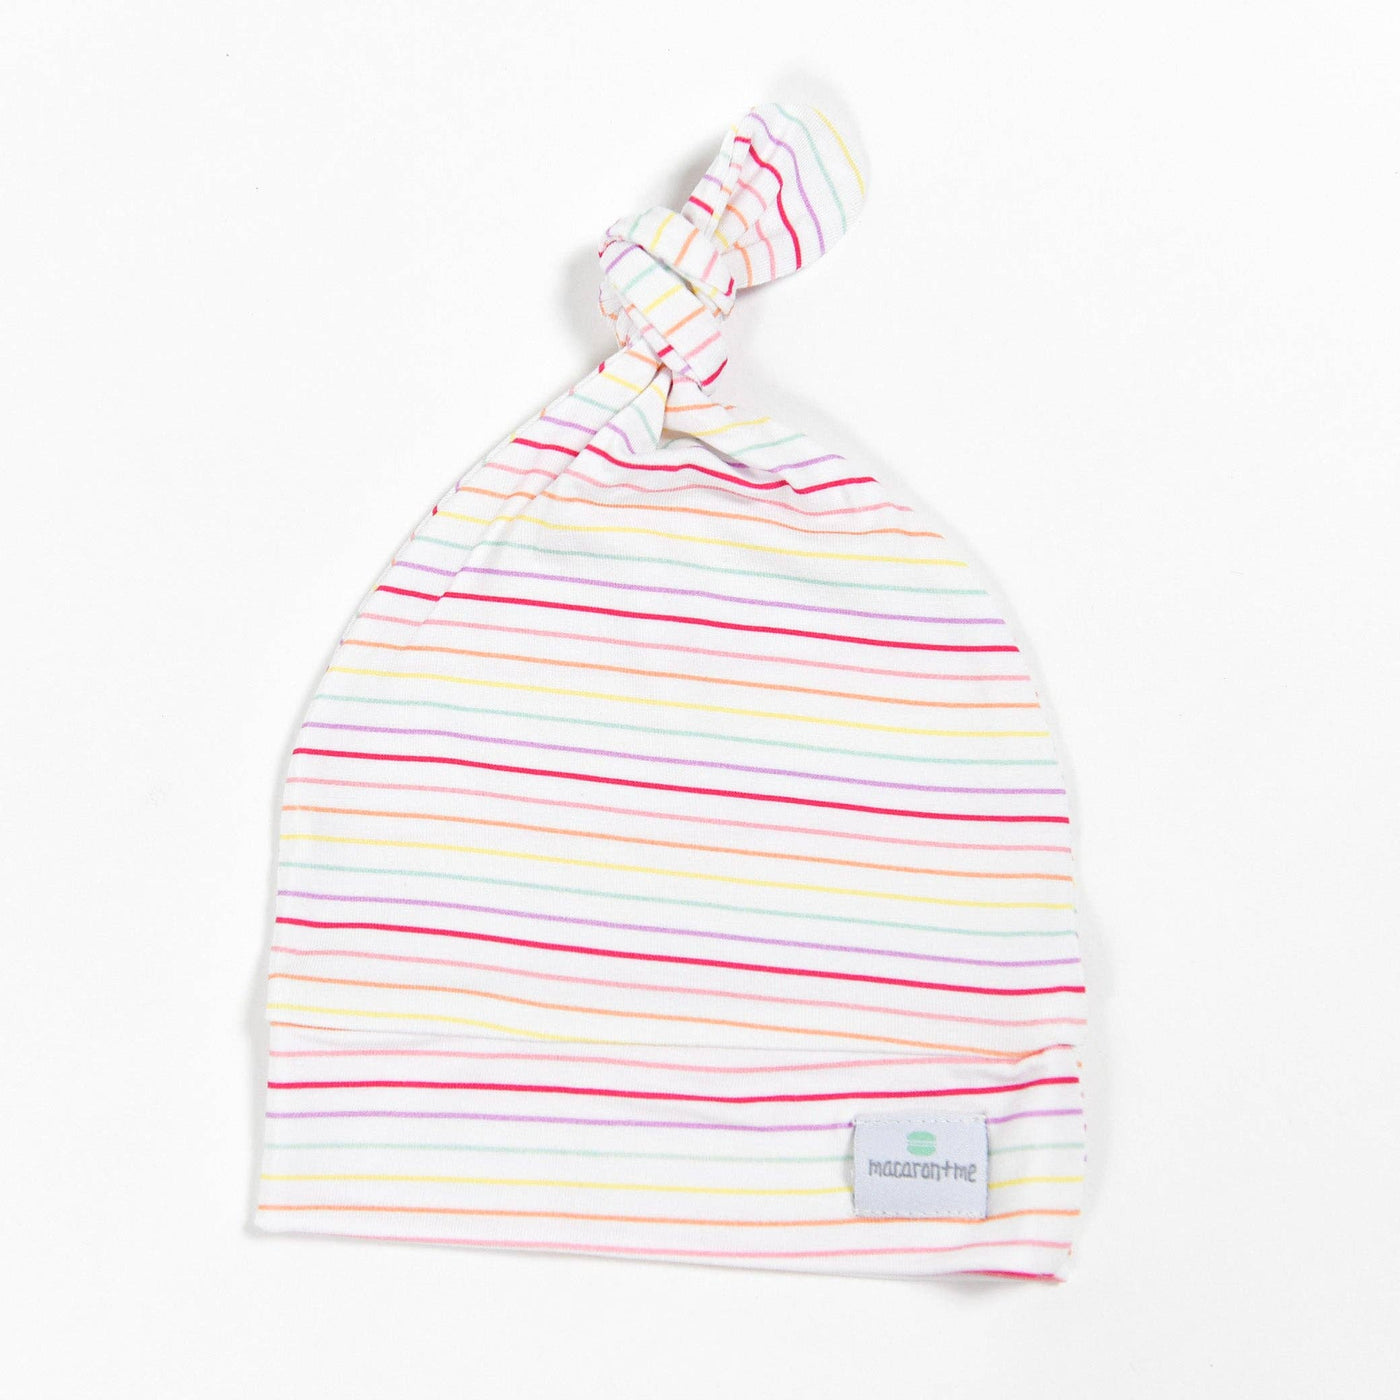 Macaron + Me - Candy Stripe Top Knot Hat